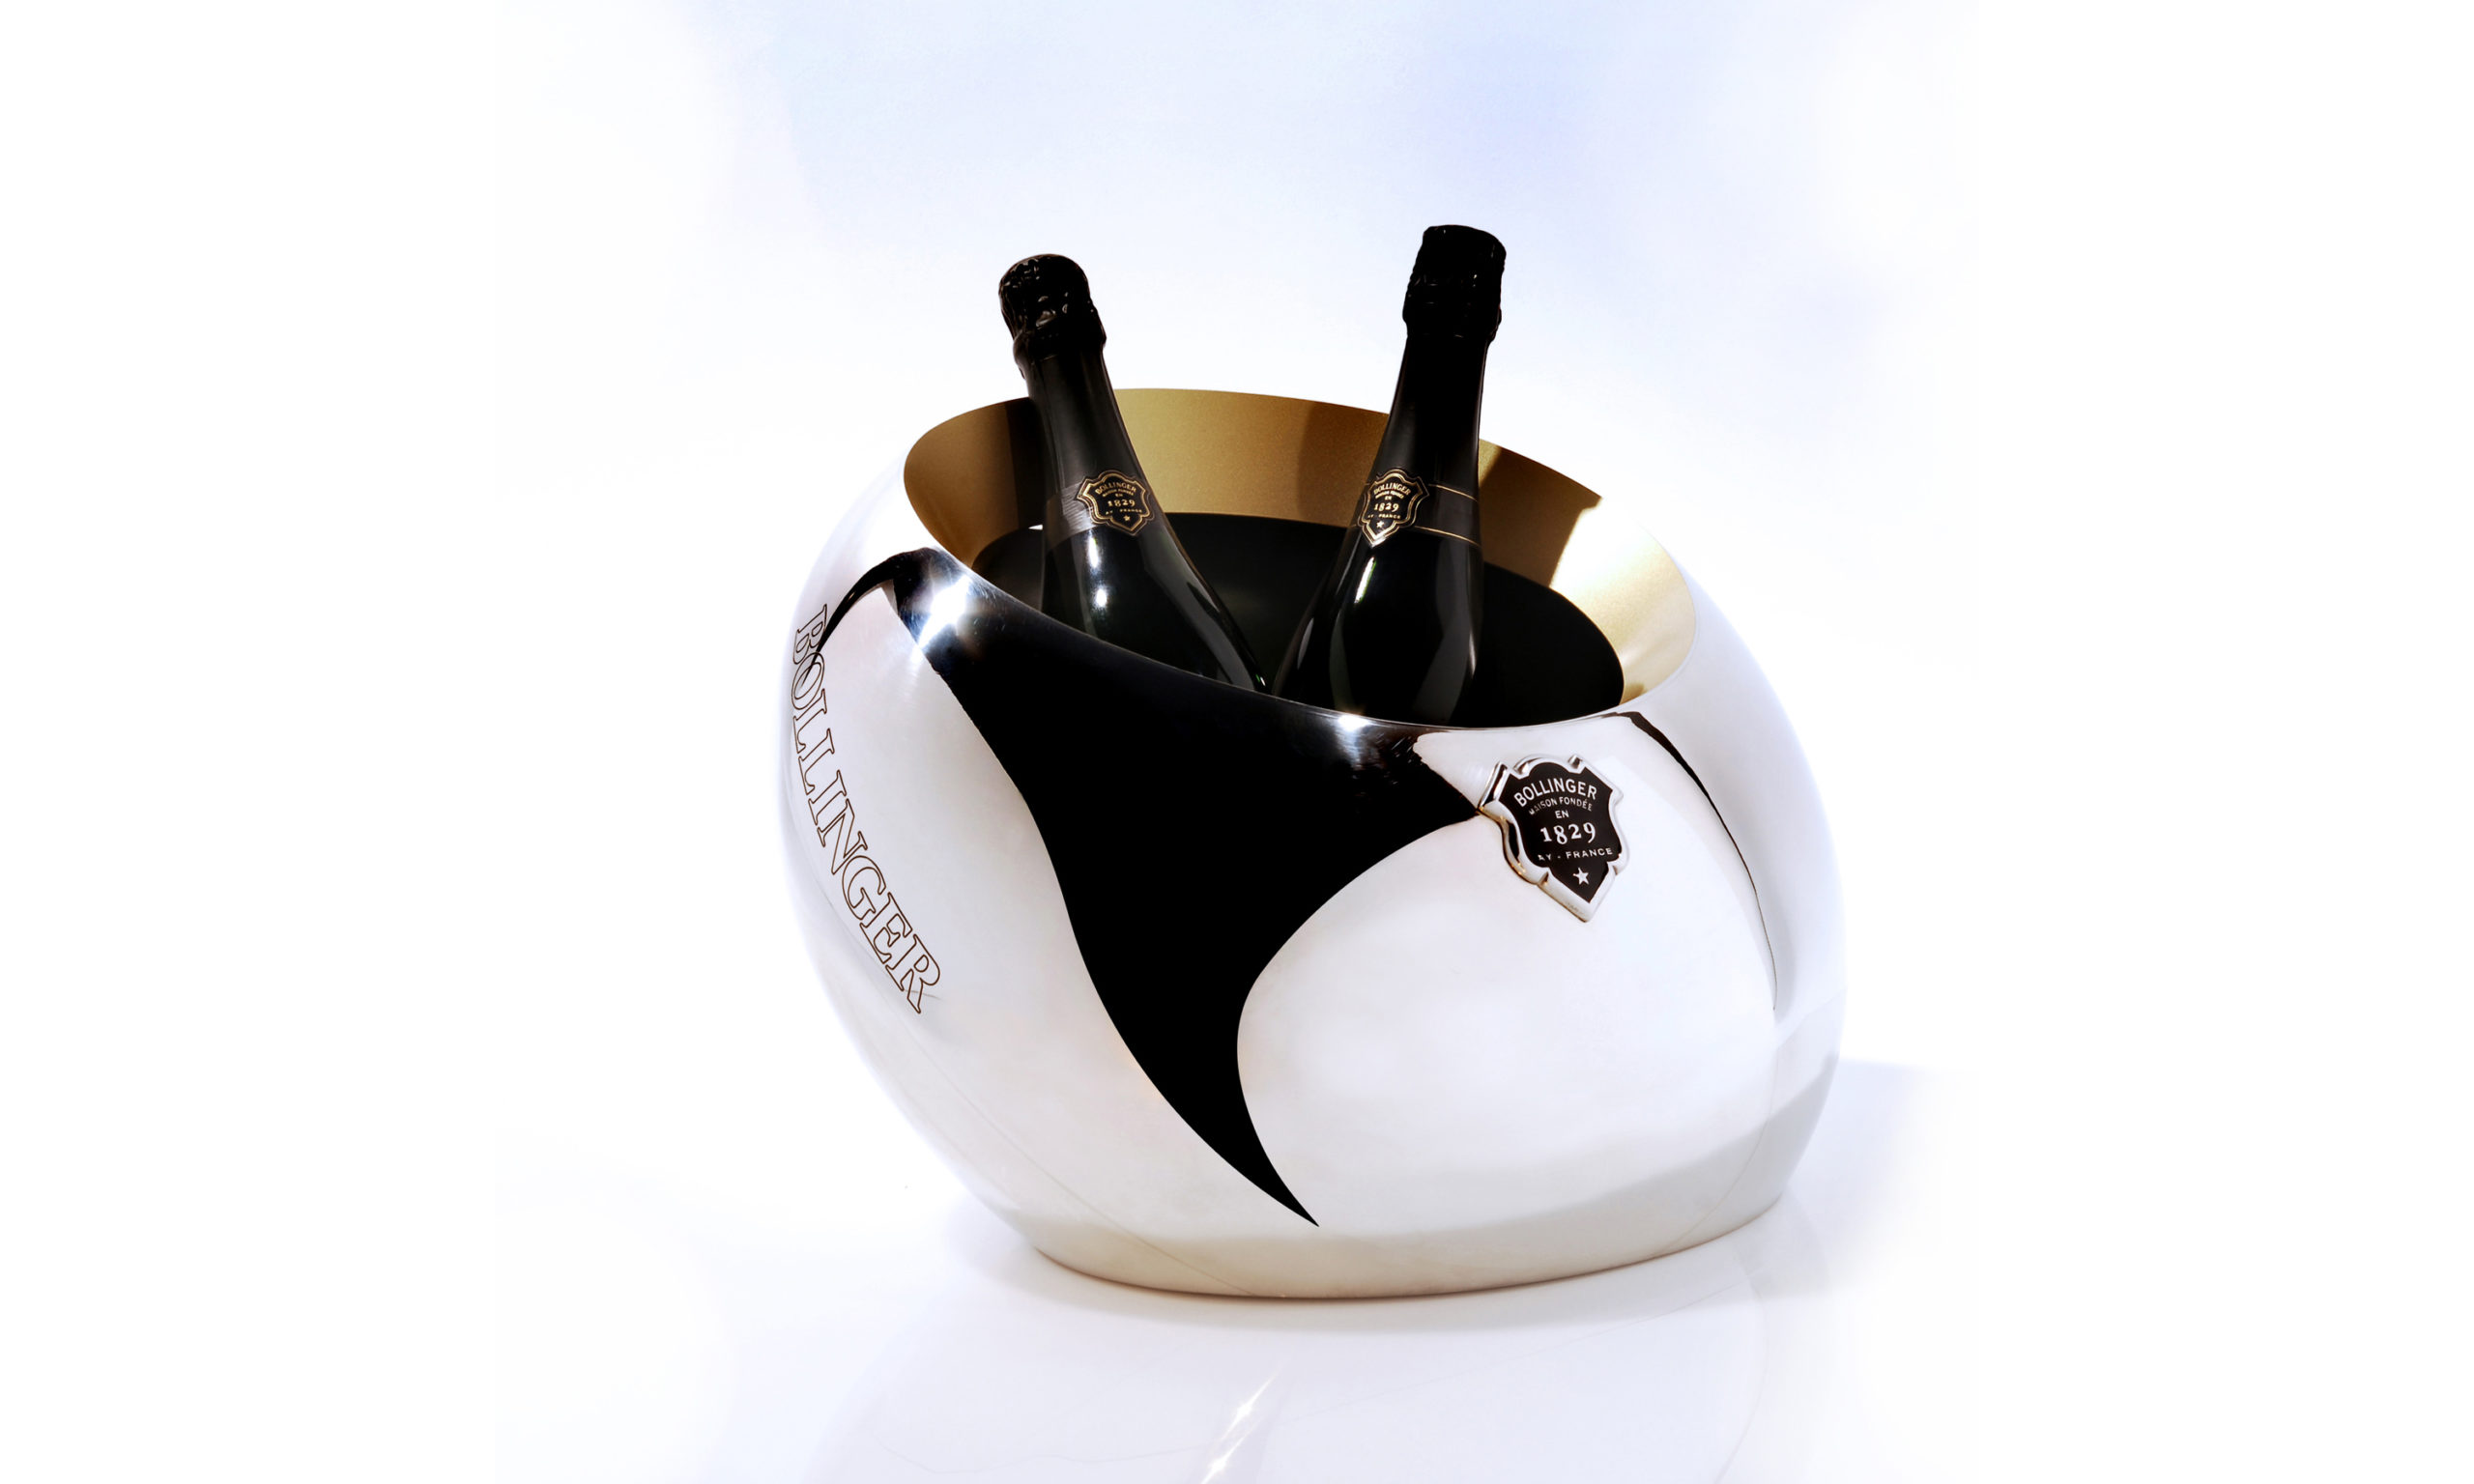 BOLLINGER_Vasque-Champagne_DESIGN-PRODUIT_Spiritueux-ChampagnePLANET-DESIGN-PARIS-Eric-Berthes_01-scaled.jpg